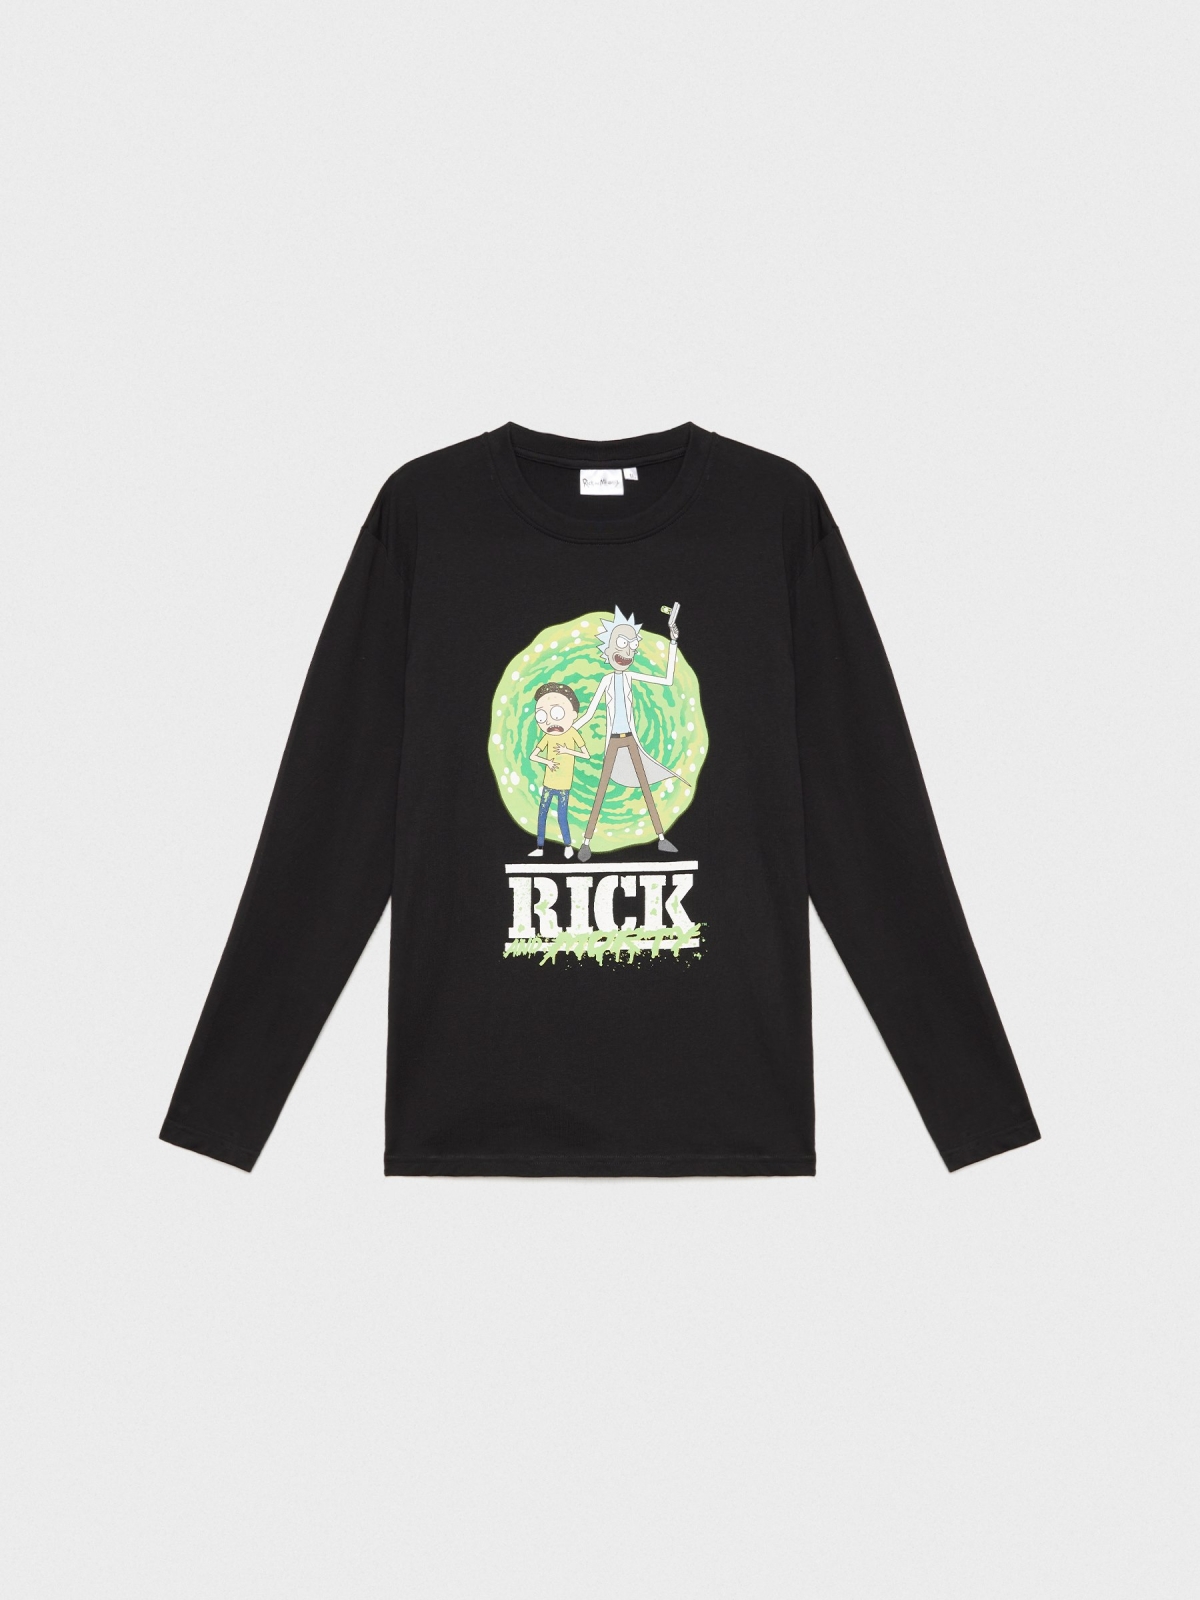  Rick&Morty series T-shirt black